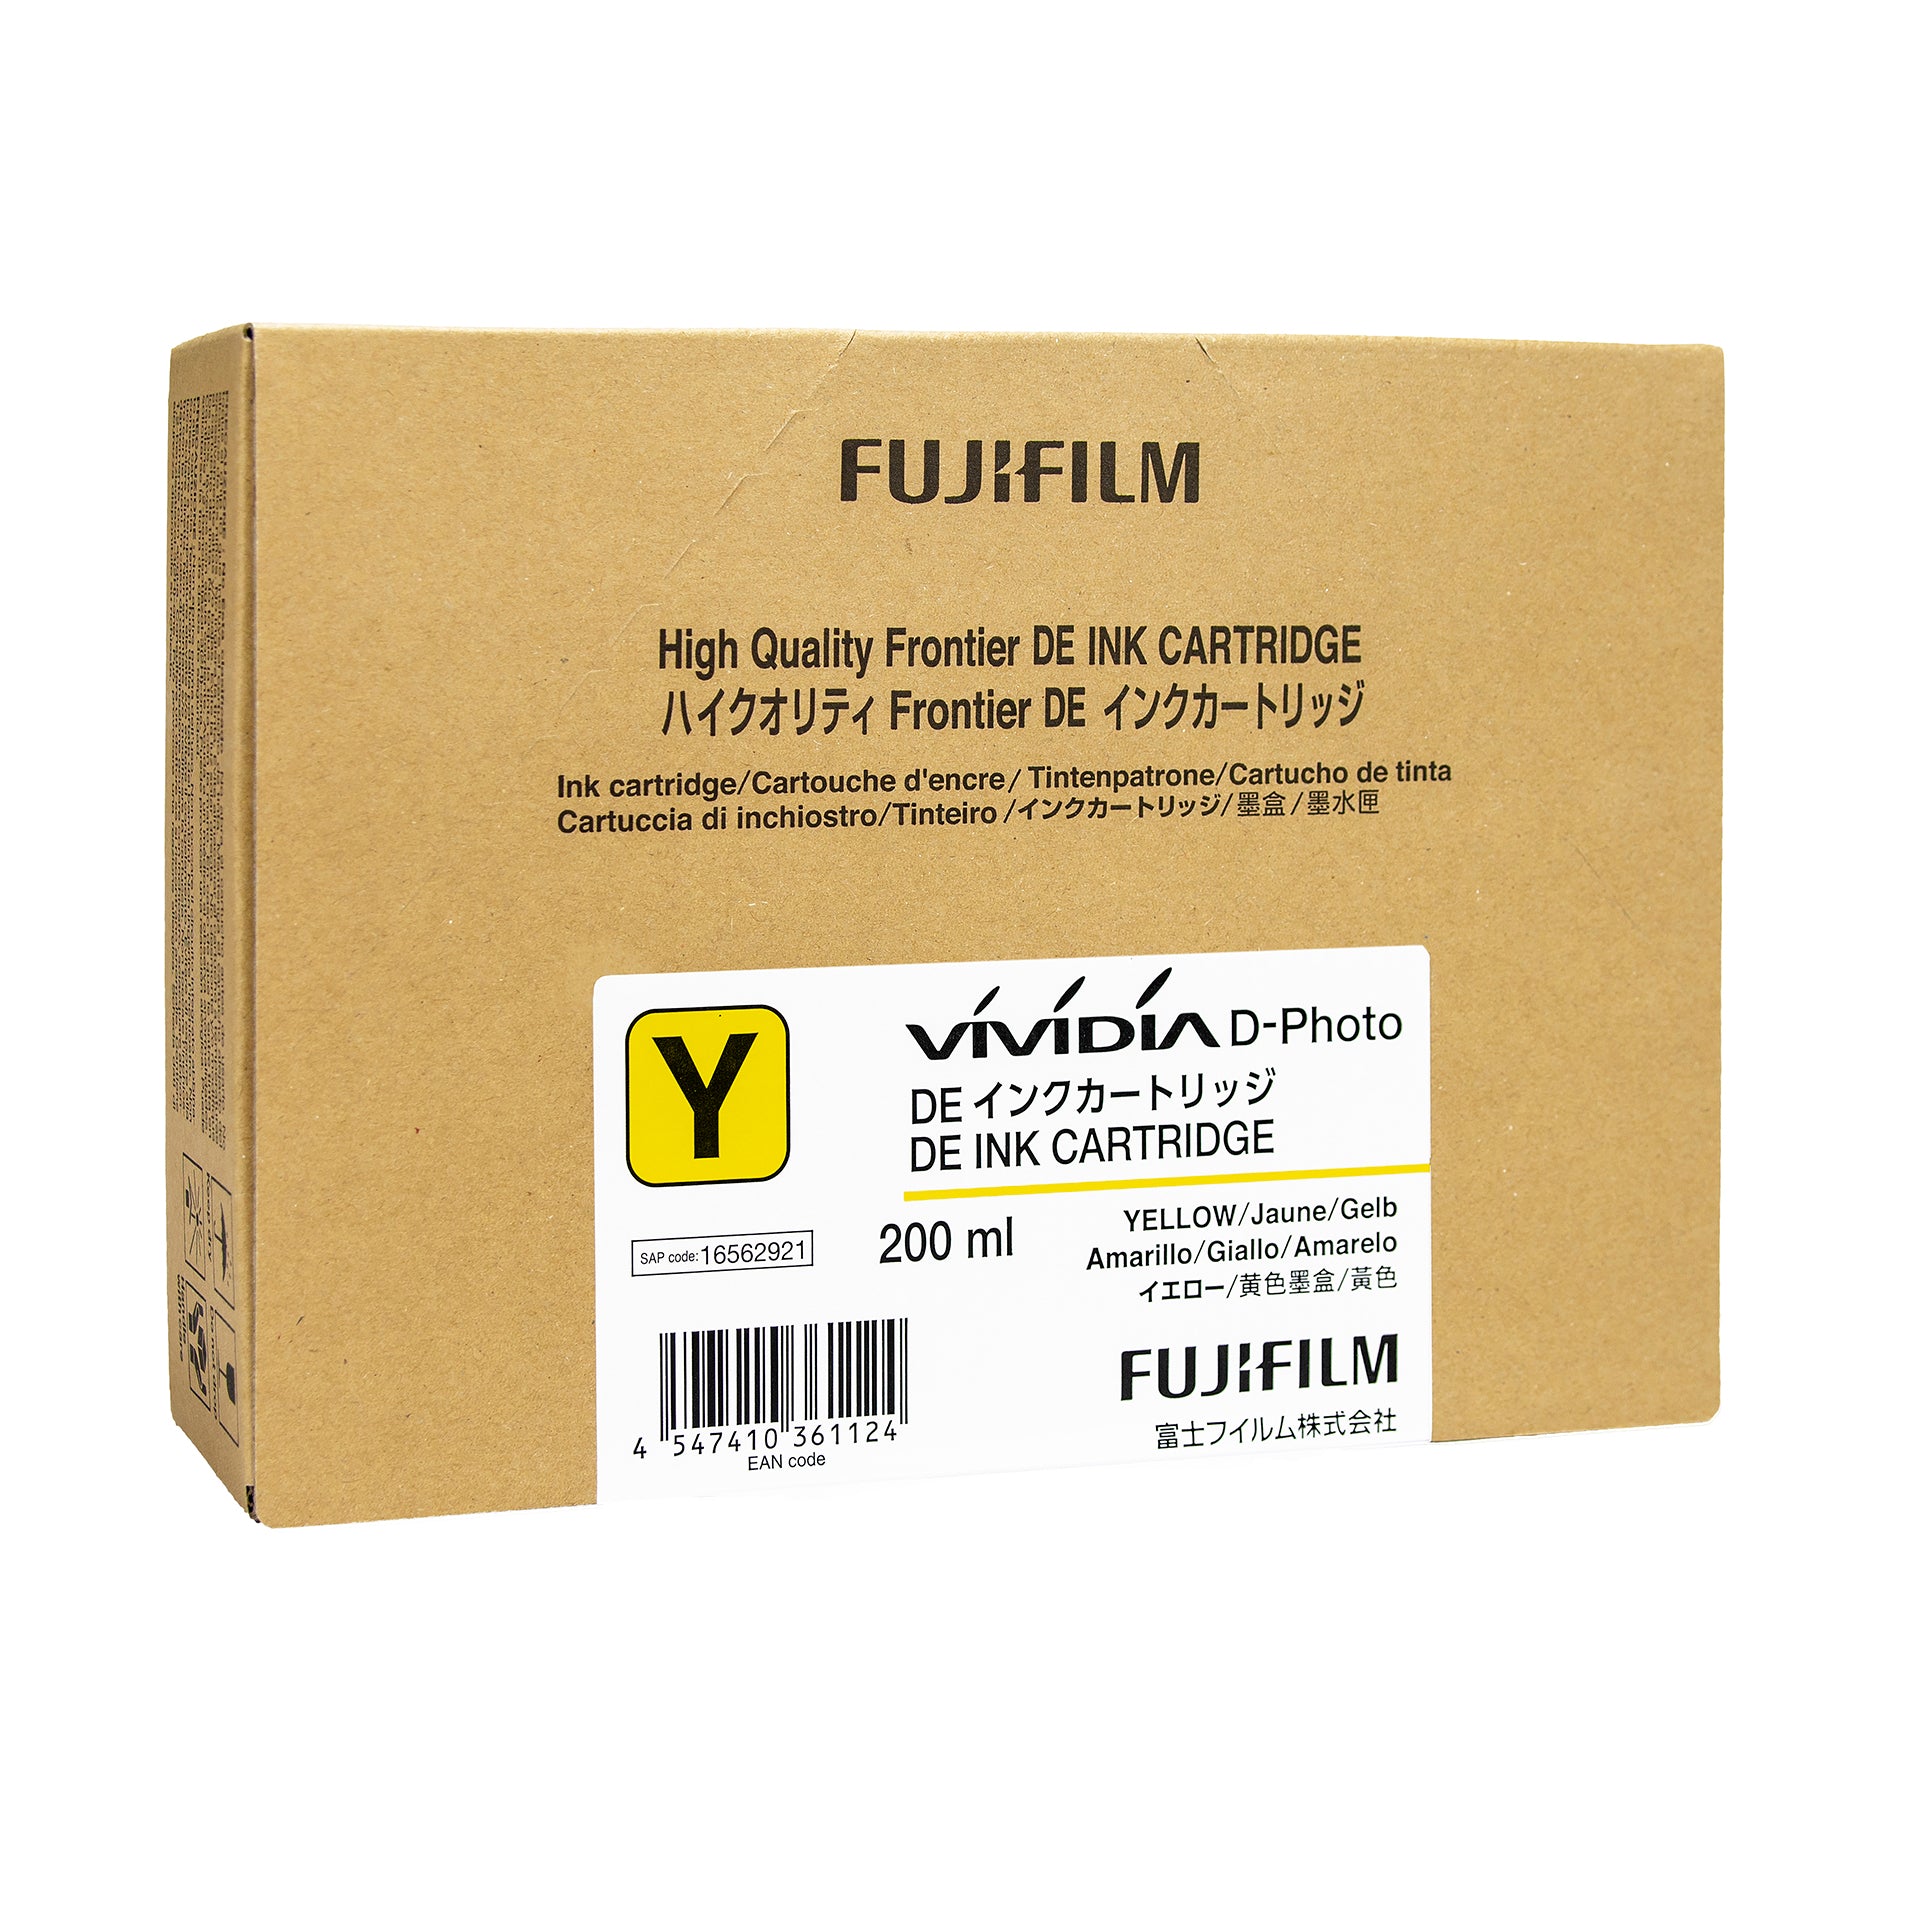 Fujifilm Frontier DE Ink Cartridge Yellow 200ml Fujifilm Printer Ink